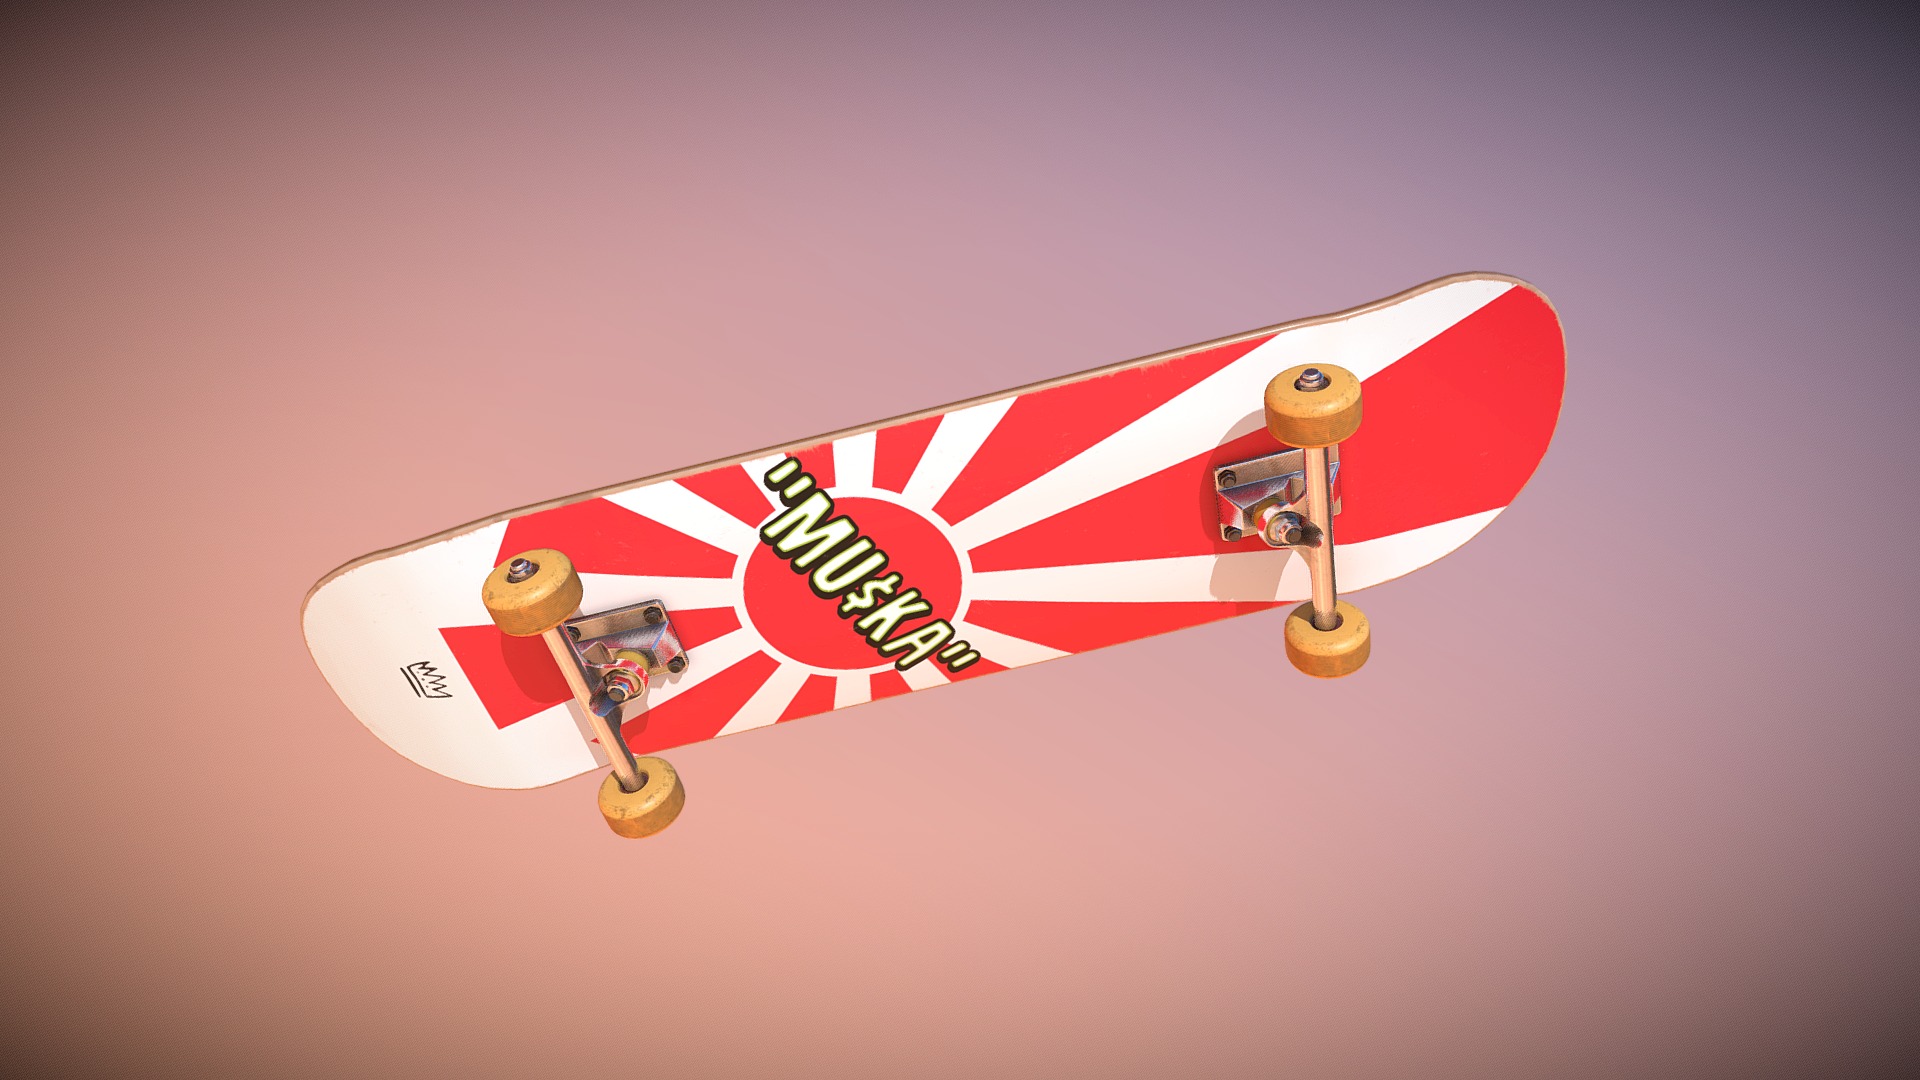 3D model Skateboard "Chad Muska" - This is a 3D model of the Skateboard "Chad Muska". The 3D model is about text.